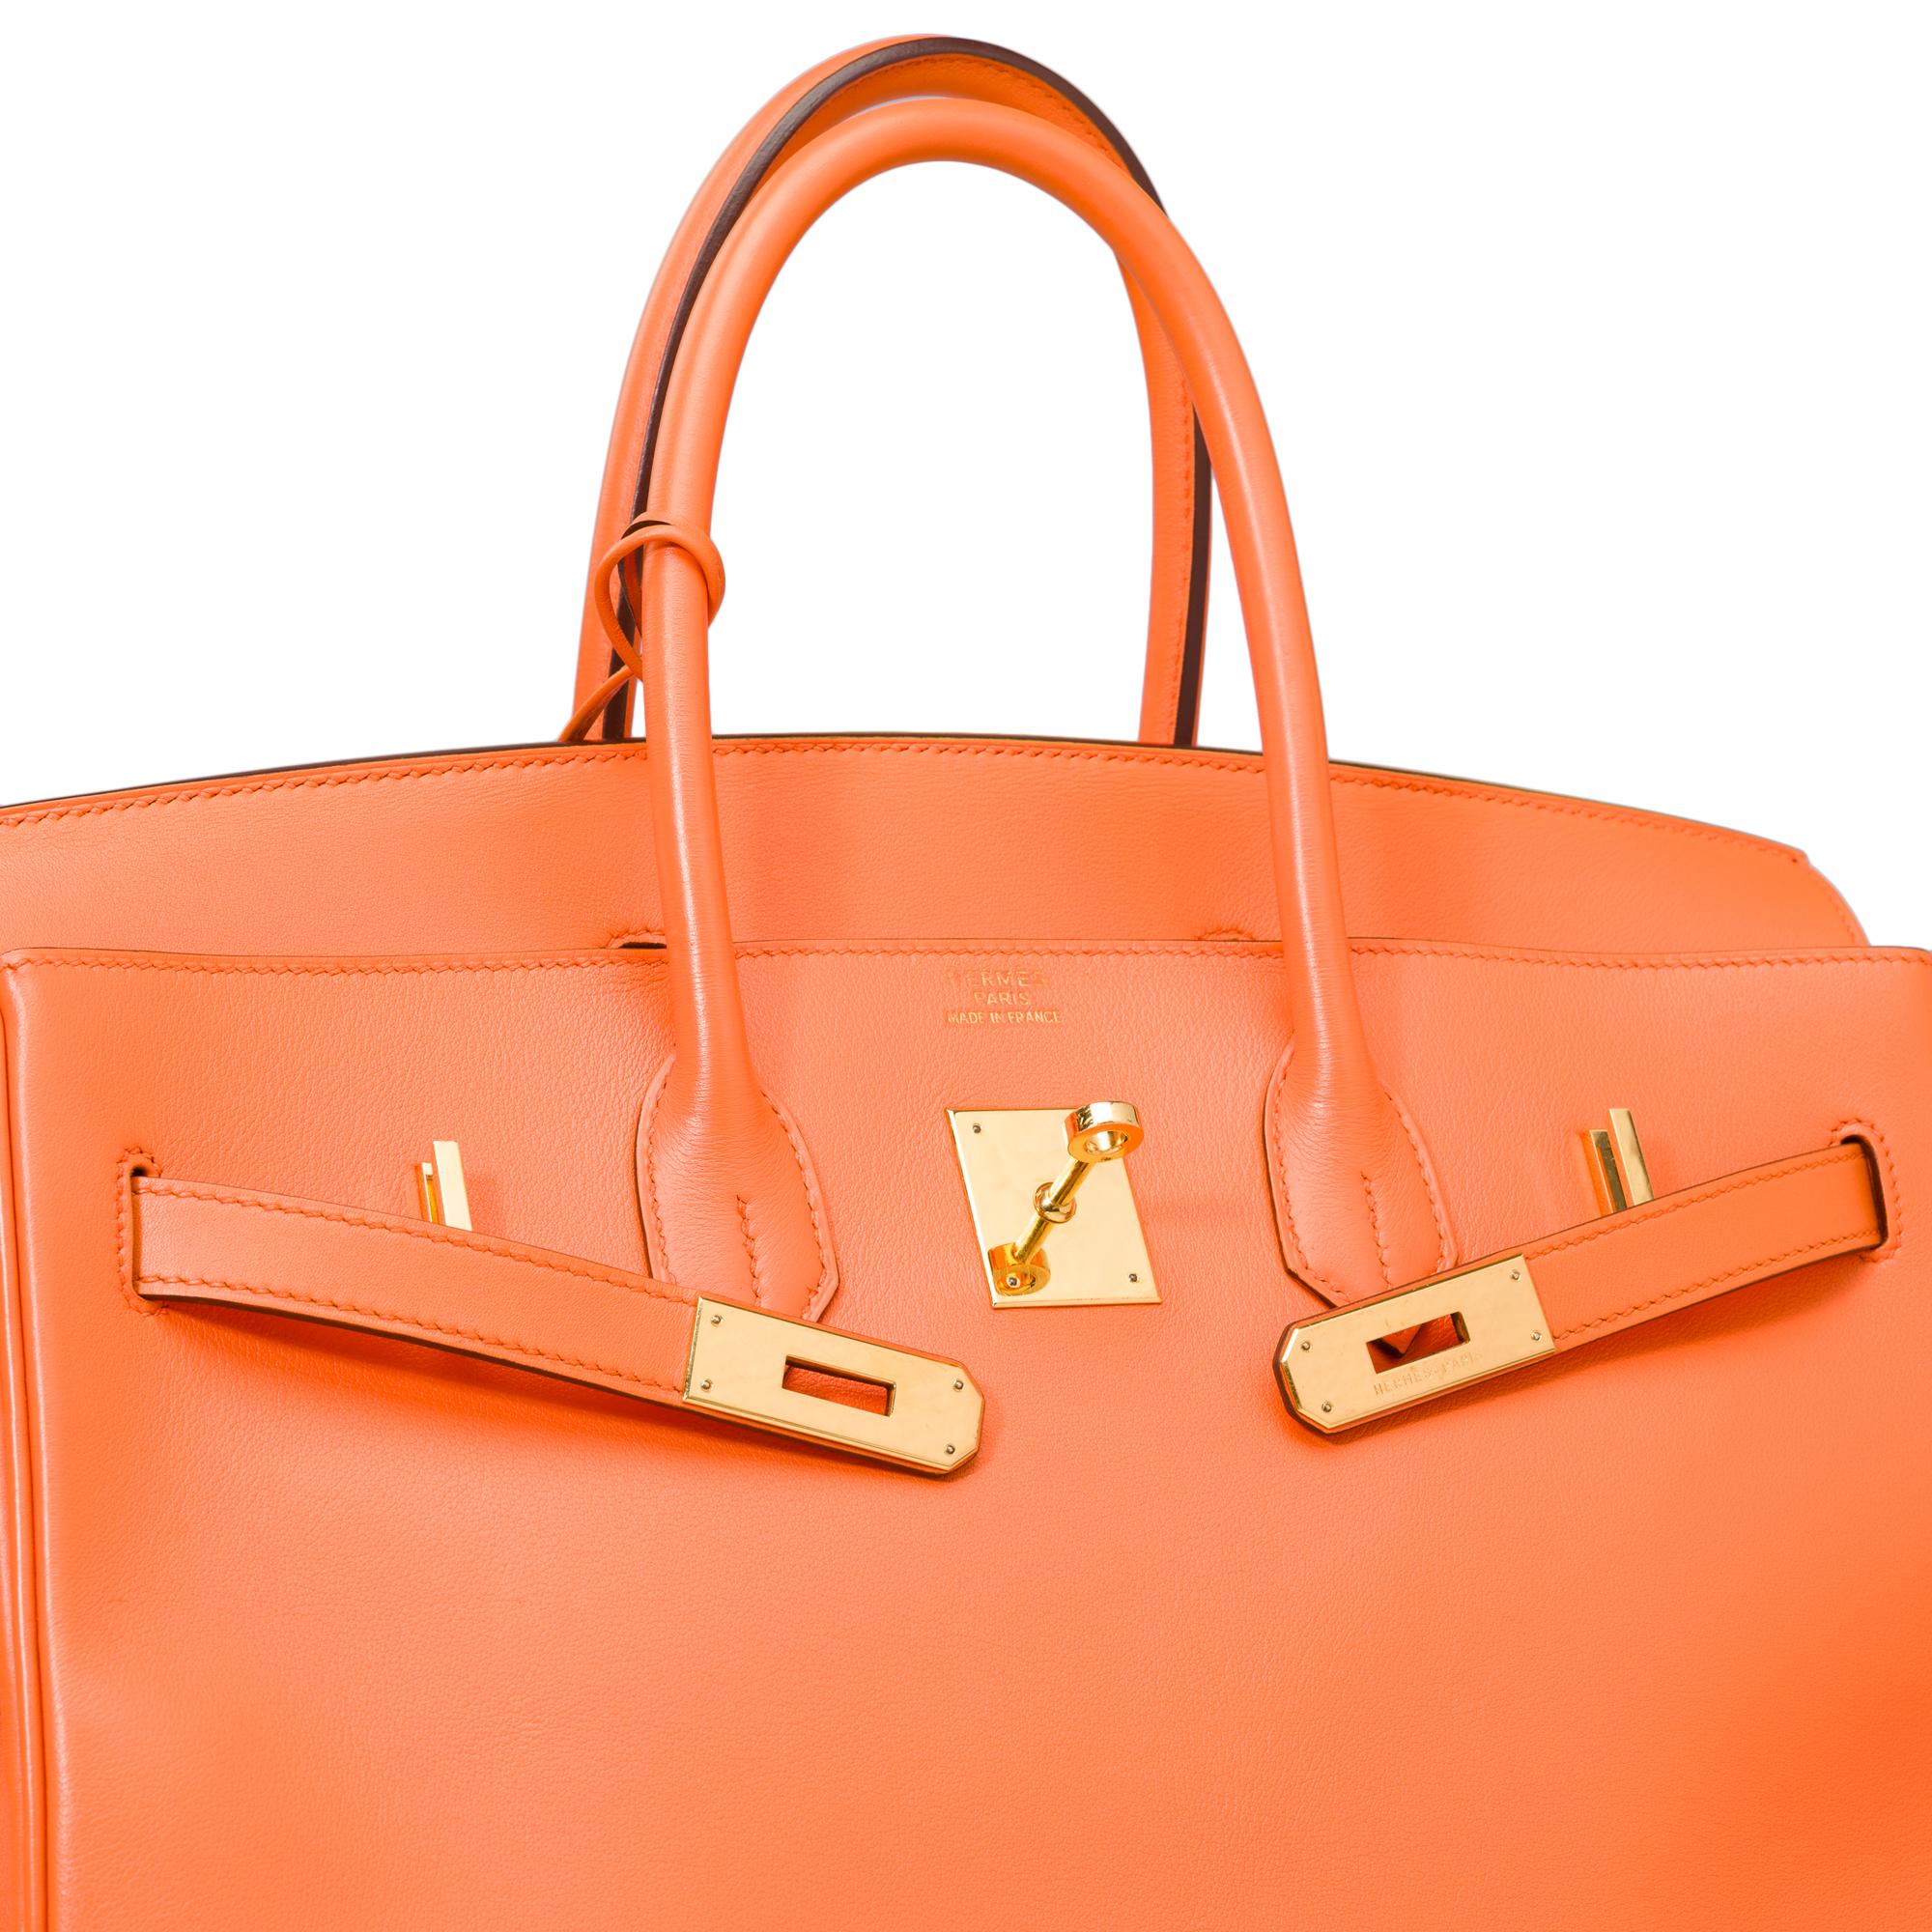 Amazing Hermès Birkin 35 handbag in Orange Swift Calf leather, GHW 3